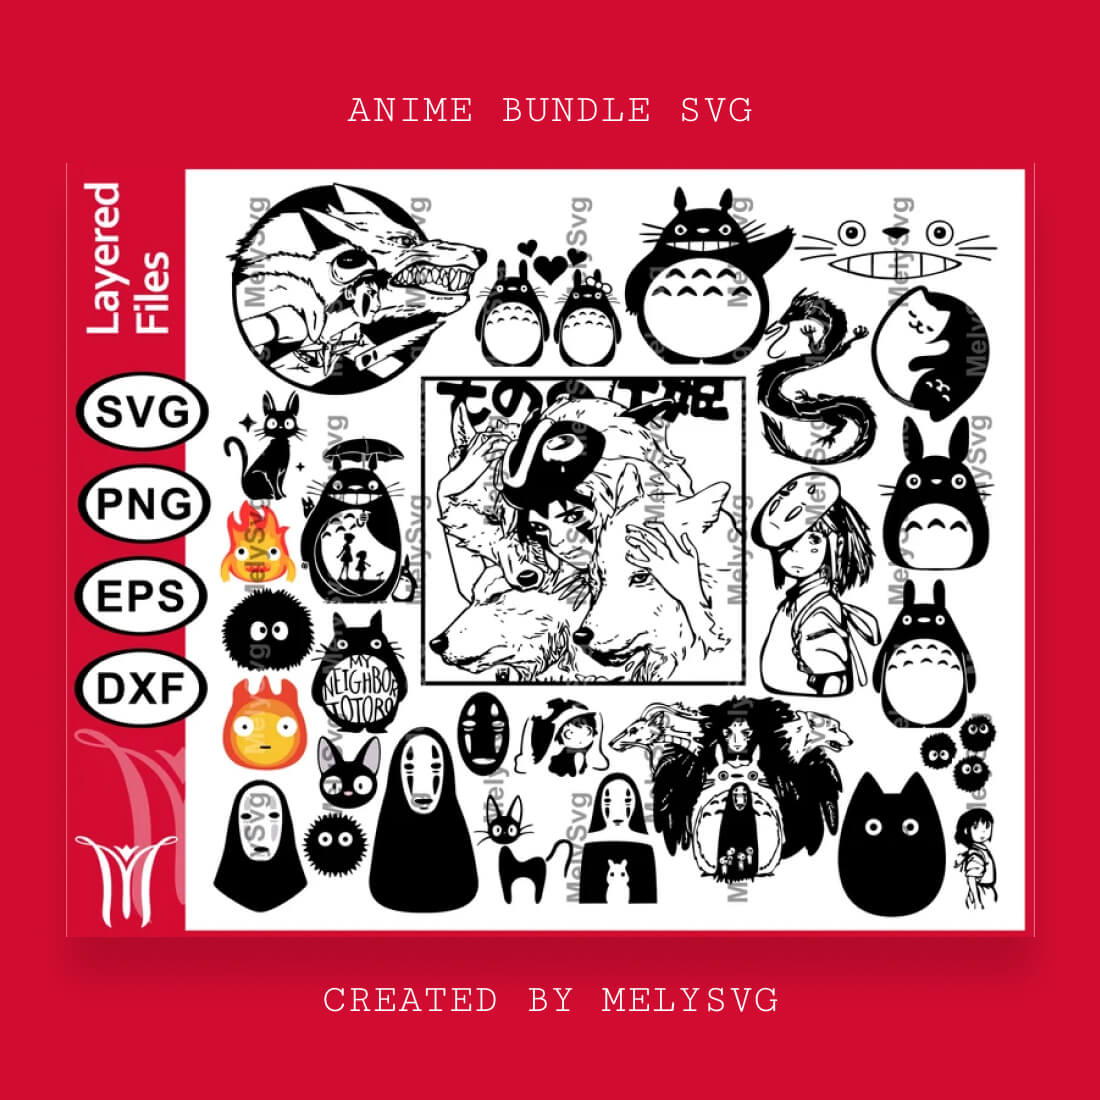 Anime Bundle SVG Created by Melysvg.